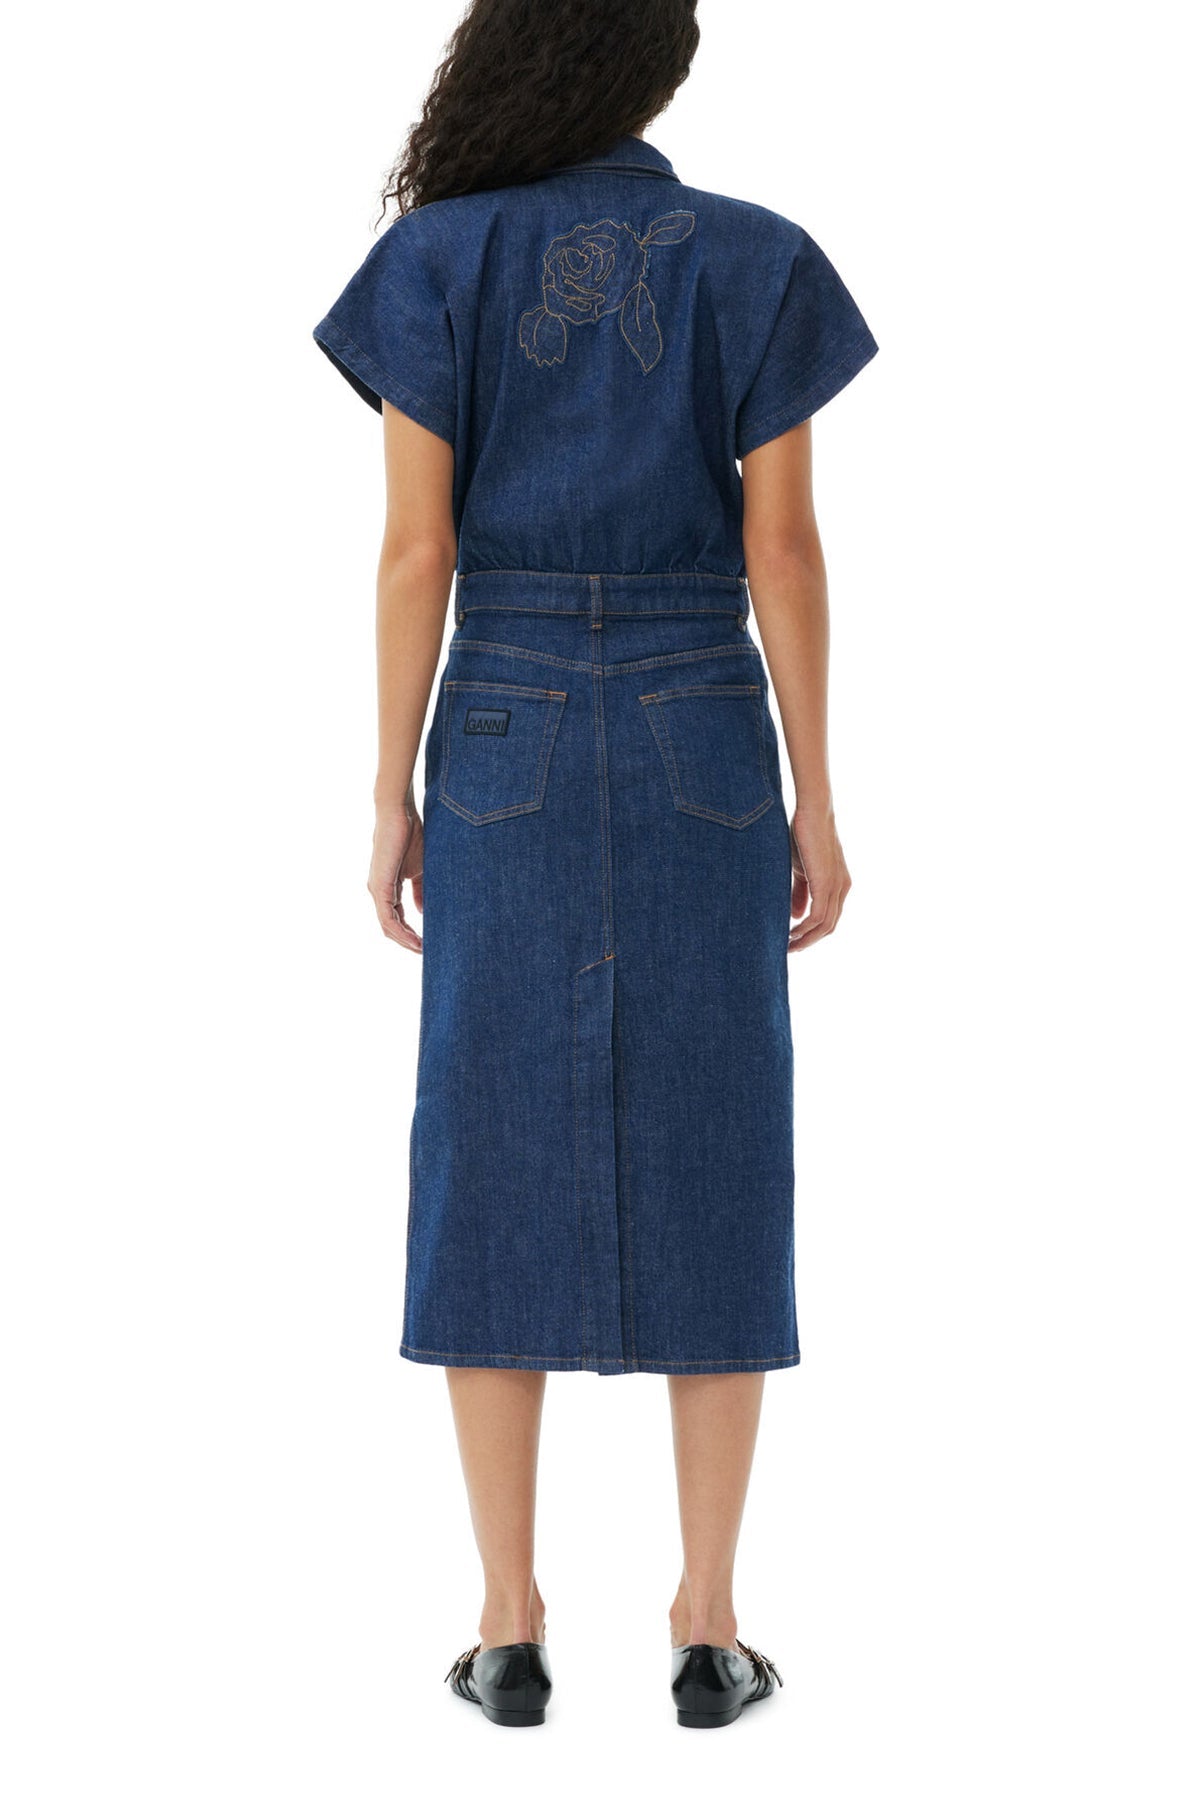 Denim Rose Midi Dress in Rinse - shop-olivia.com